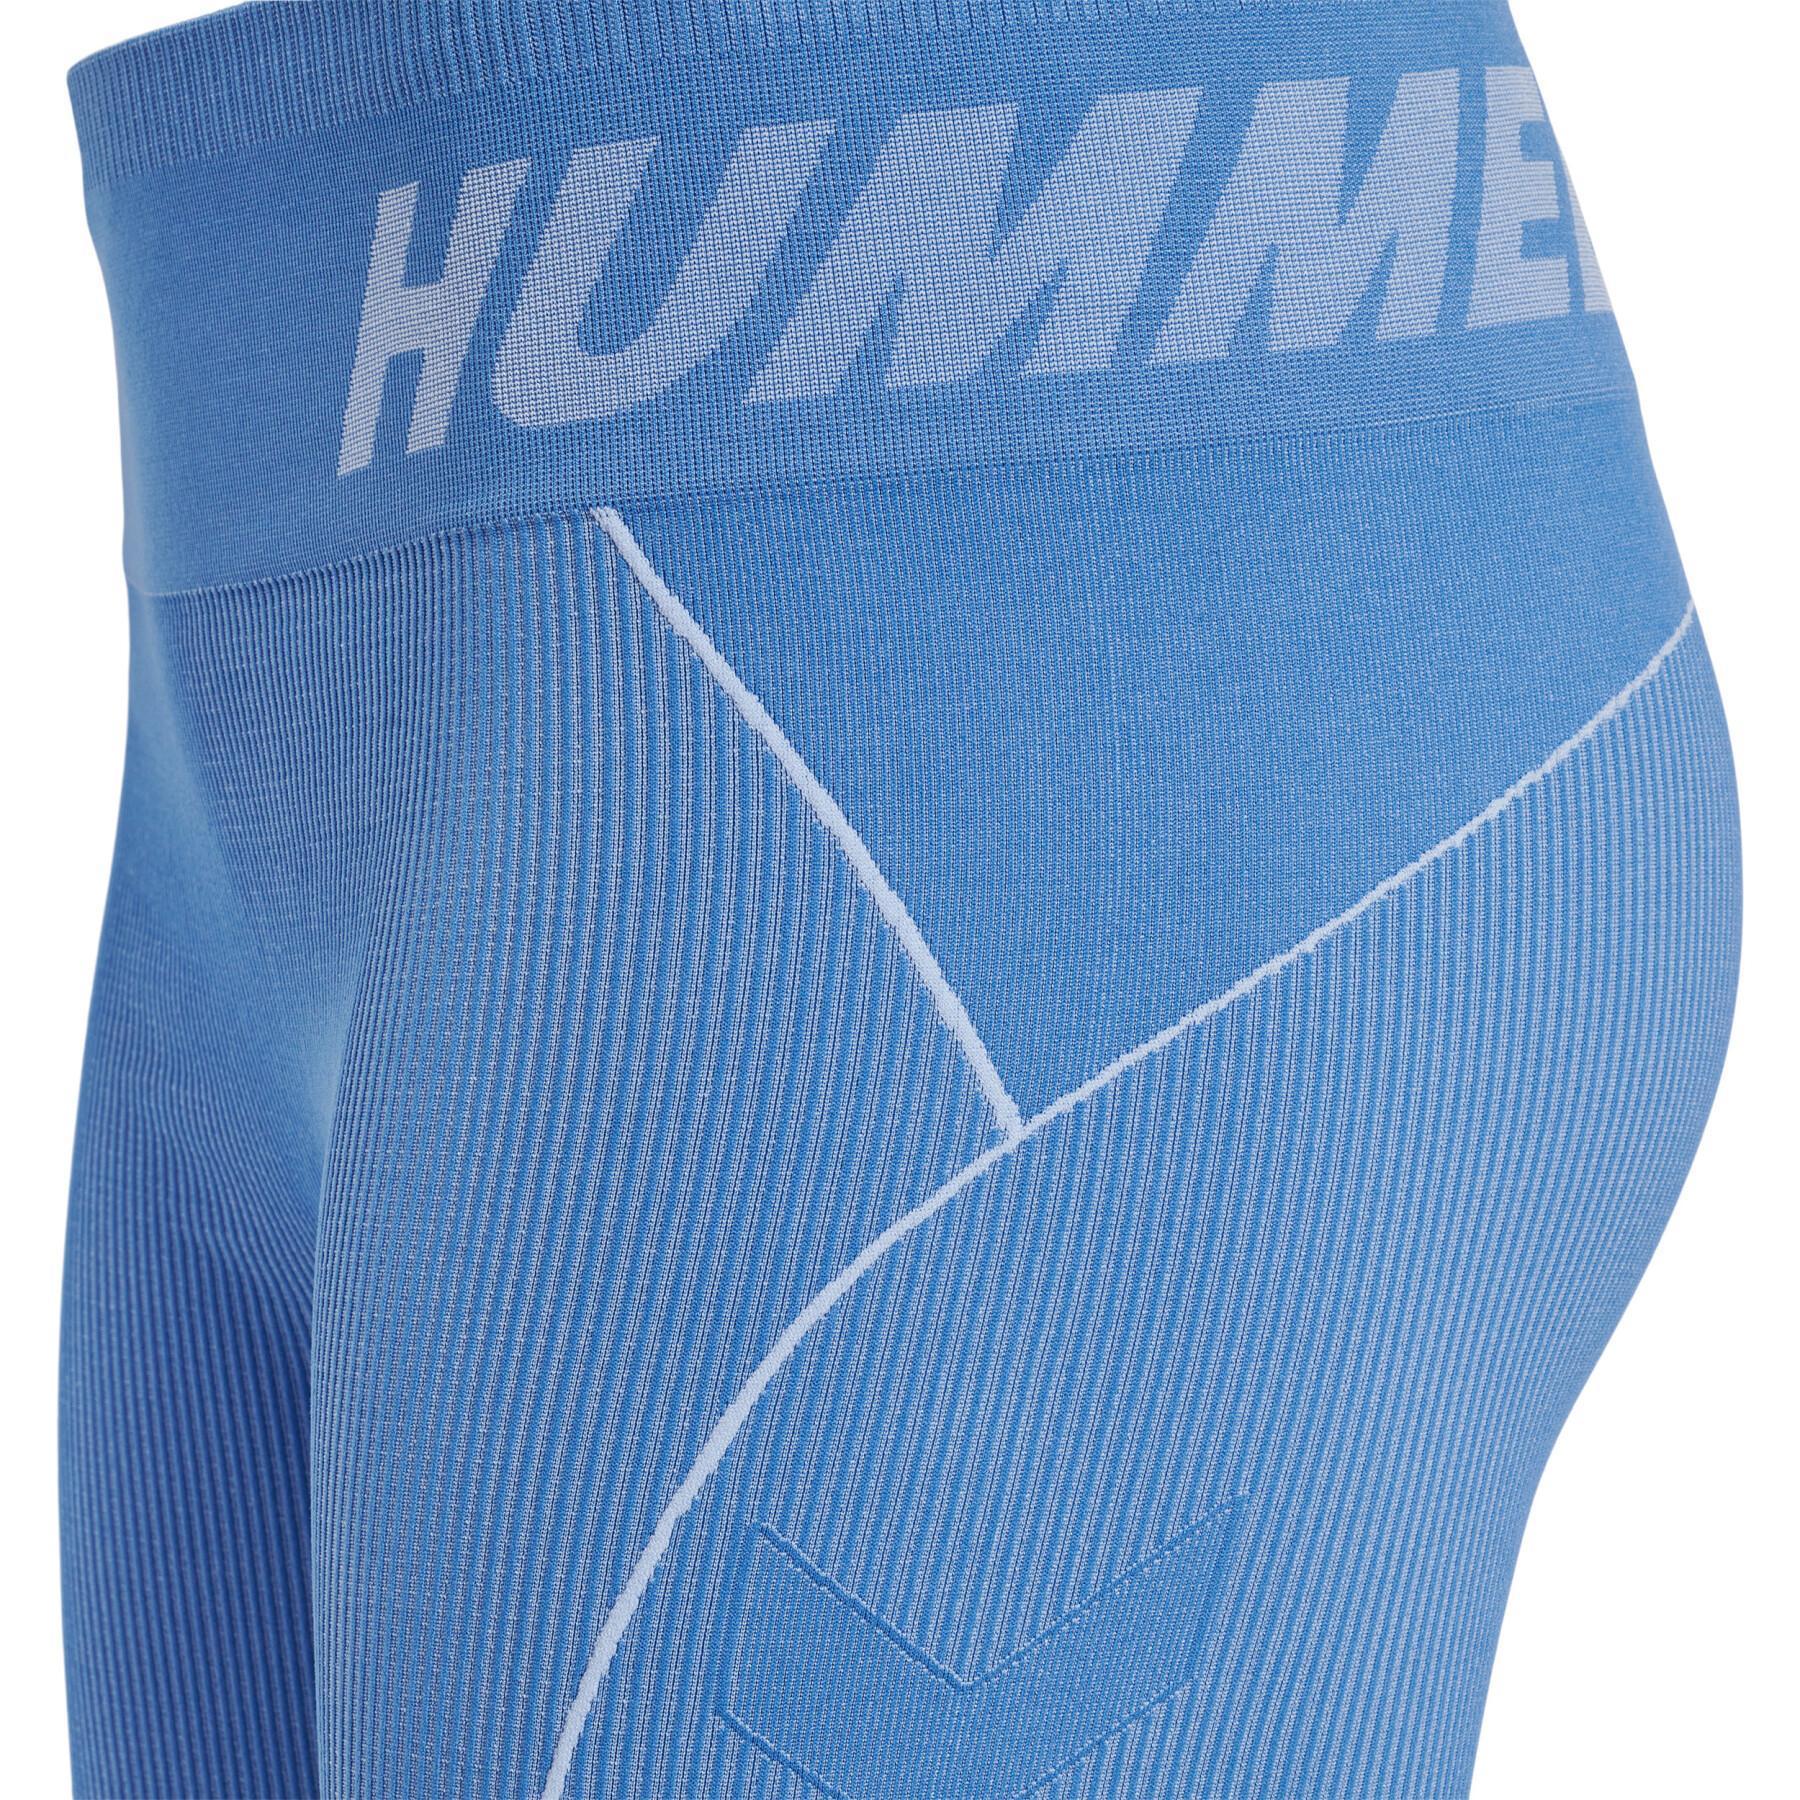 Pantalones cortos de ciclismo sin costuras para mujer Hummel Christel